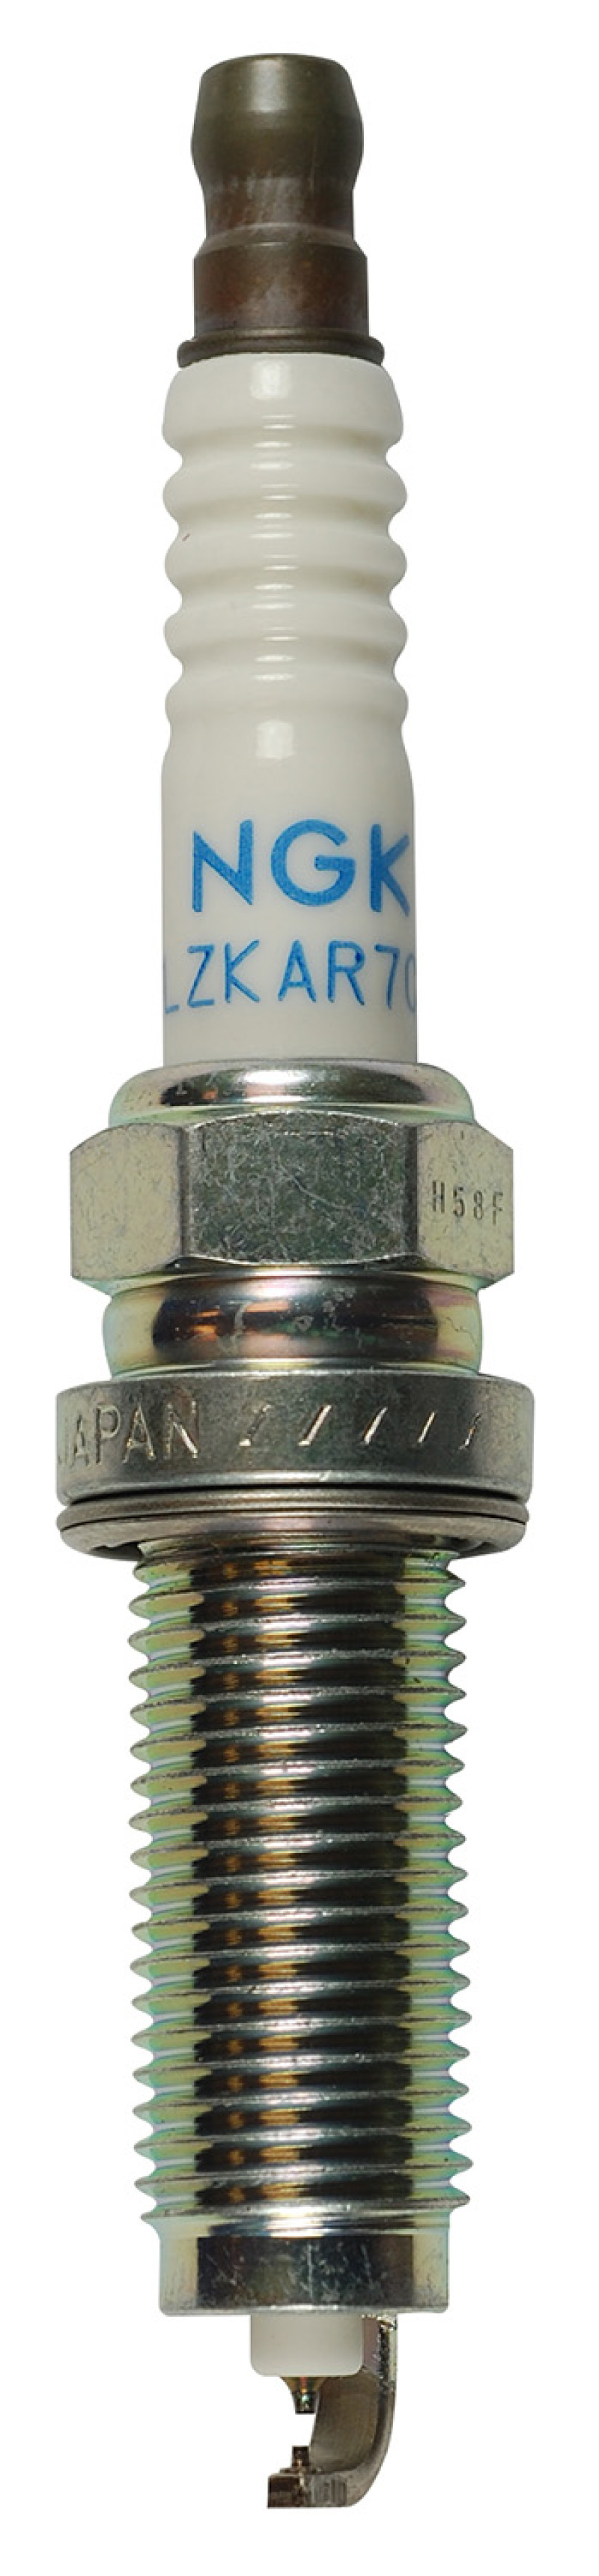 NGK Laser Iridium Spark Plug Box of 4 (DILZKAR7C11S) - 90137